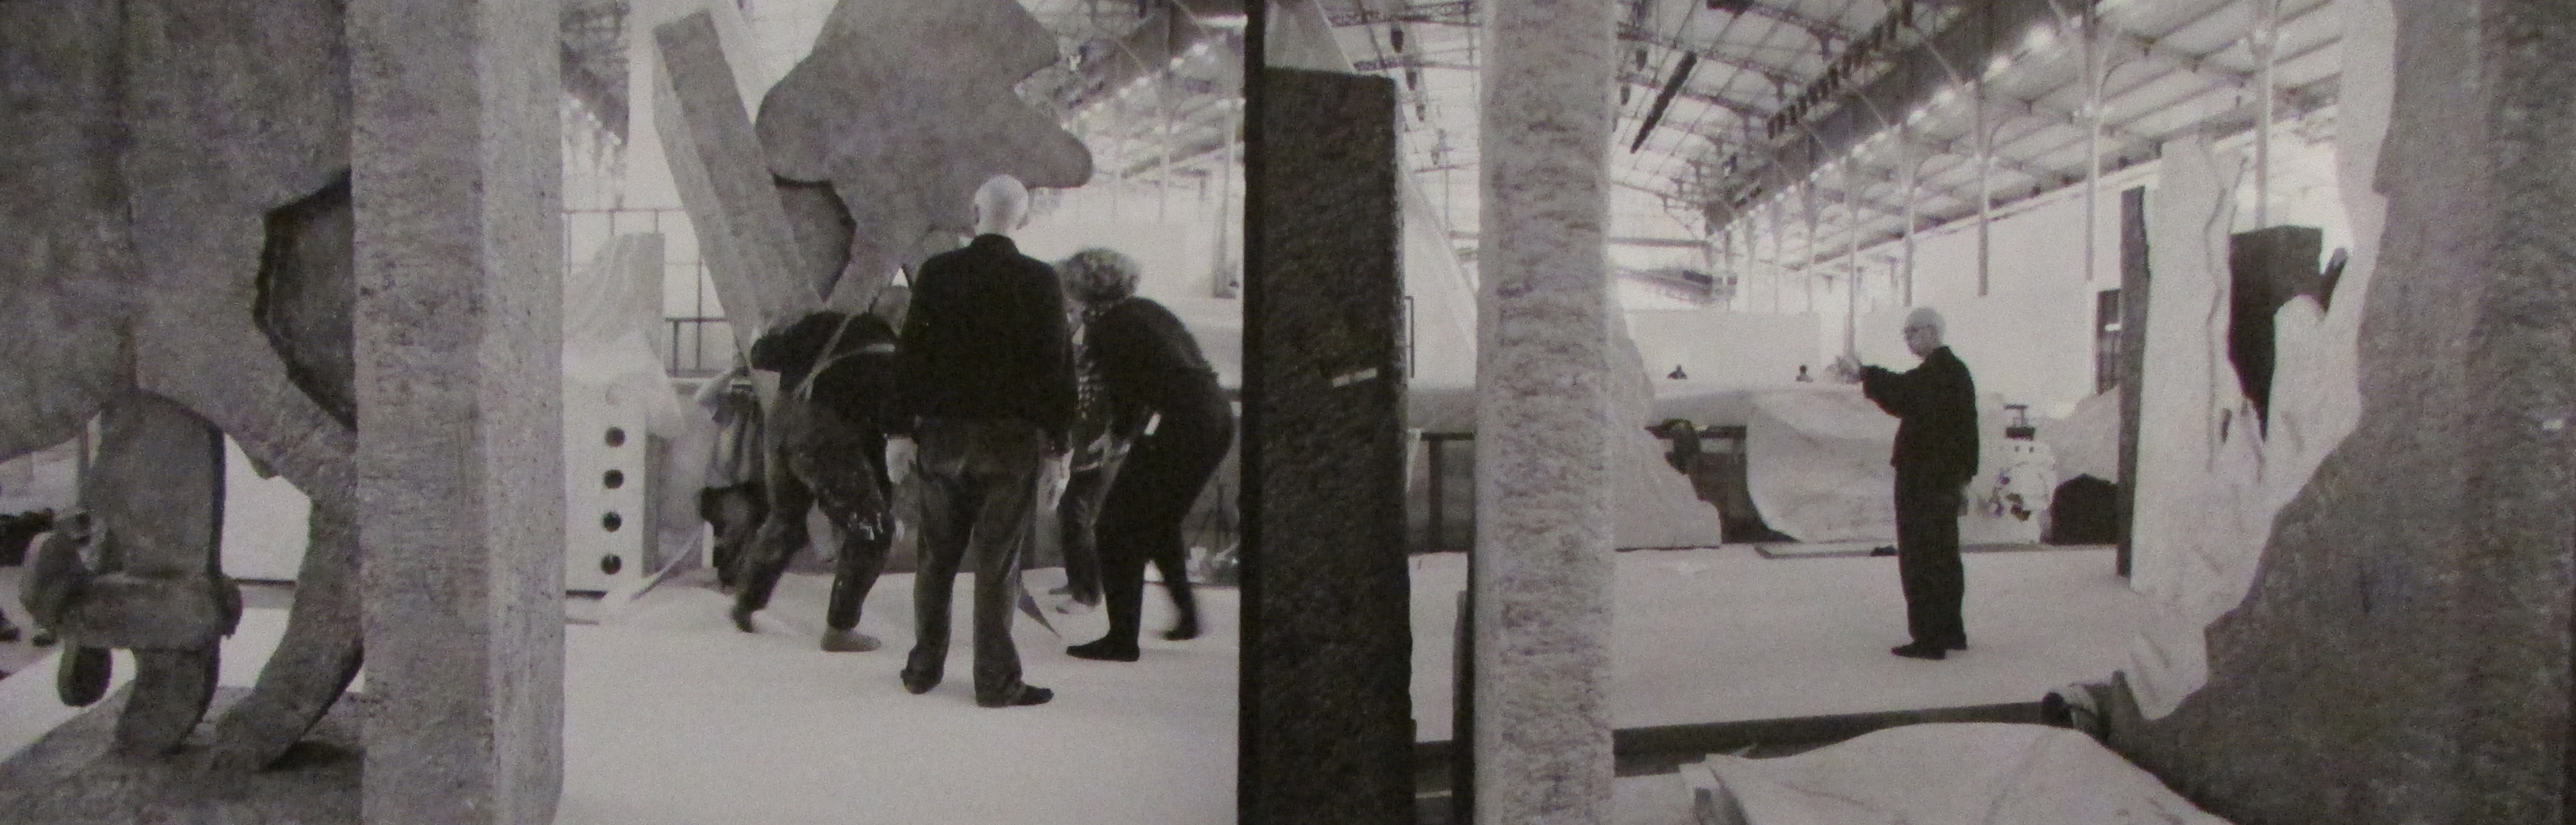 claes Oldenburg pendant l'installation de FROM THE ENTROPIC LIBRARY de Oldenburg et Van Bruggen. 1989